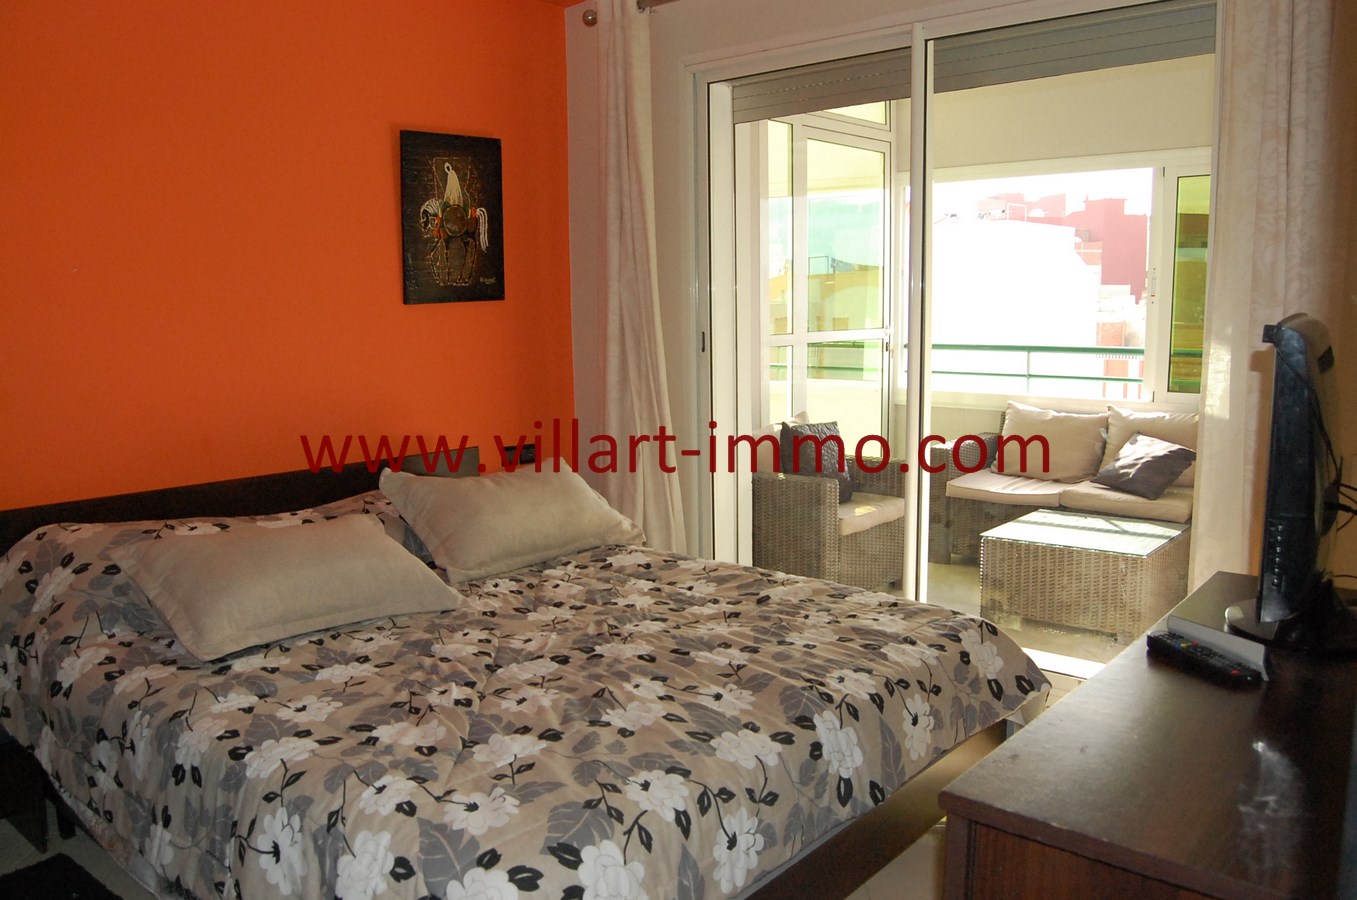 4-Vente-Appartement-Tanger-Chambre 1-VA480-Villart Immo